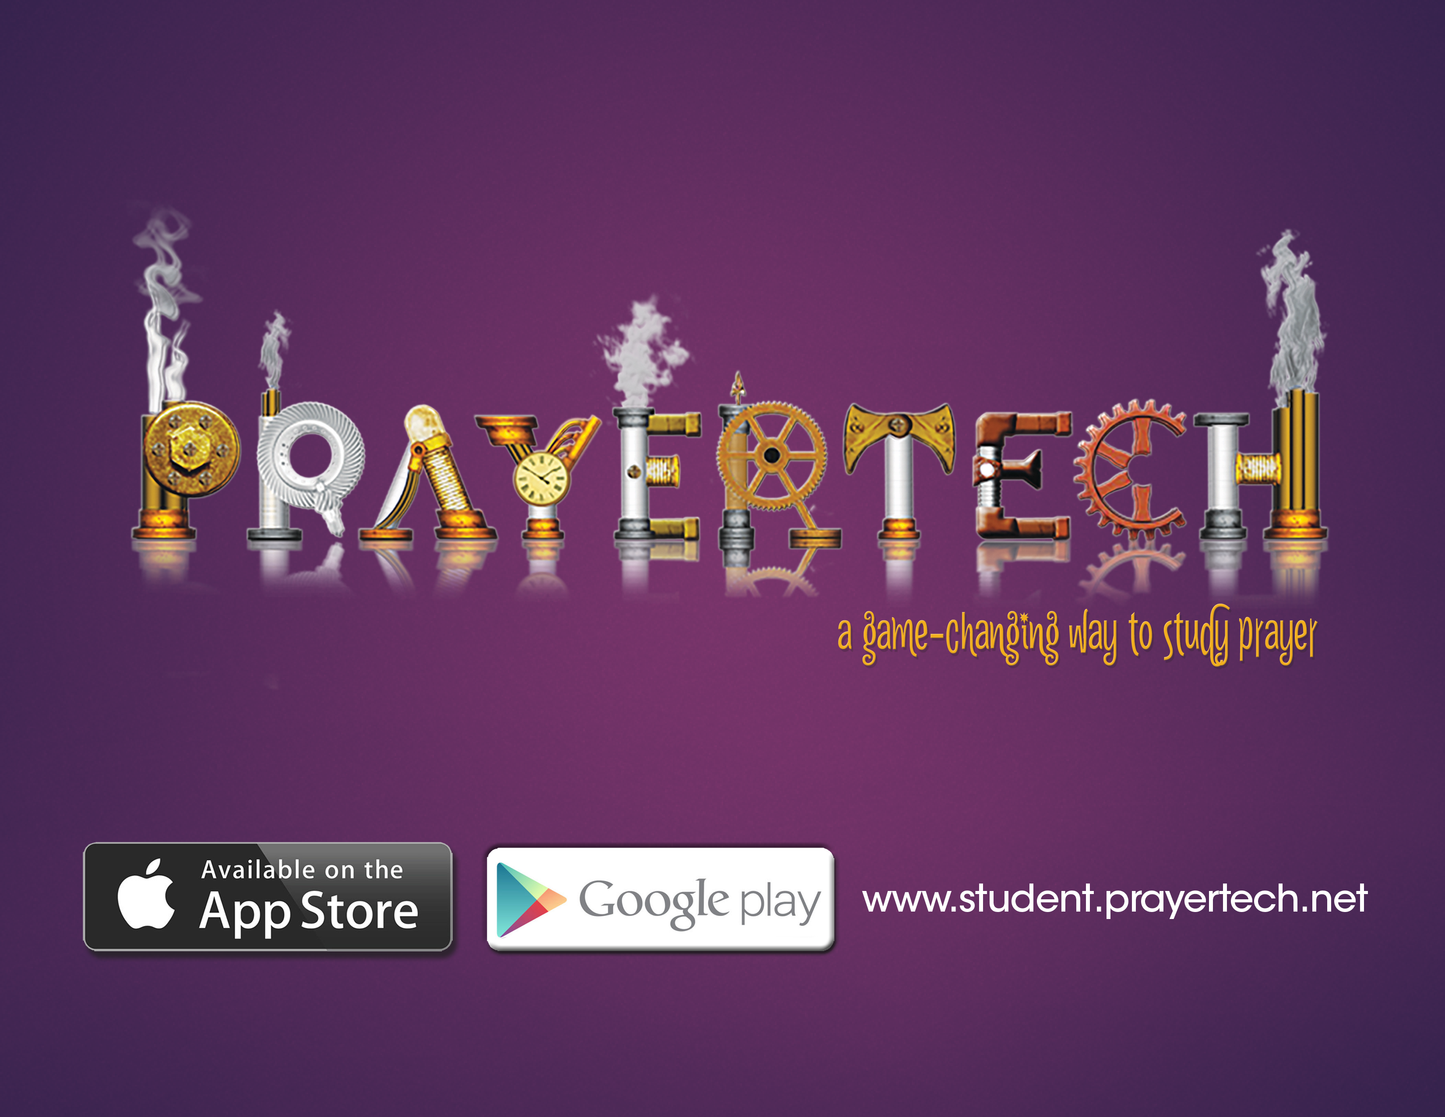 PrayerTech-Prayer Study app